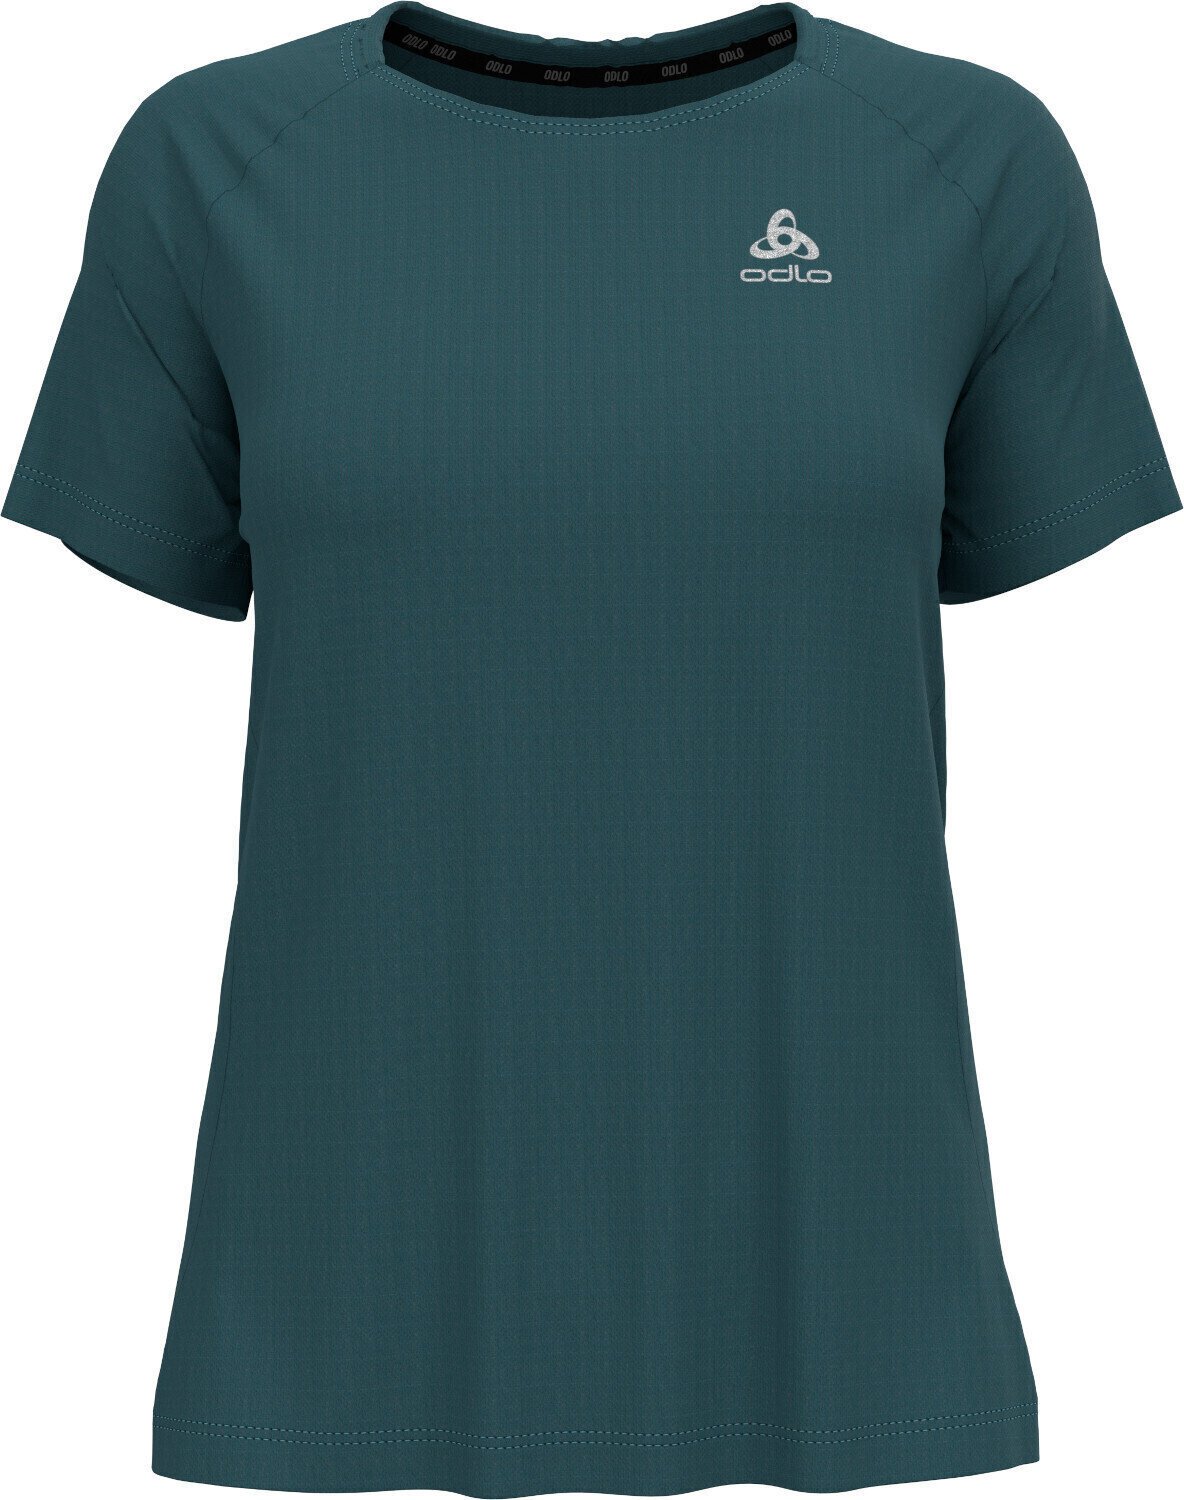 Running t-shirt with short sleeves
 Odlo Essential T-Shirt Balsam XS Running t-shirt with short sleeves